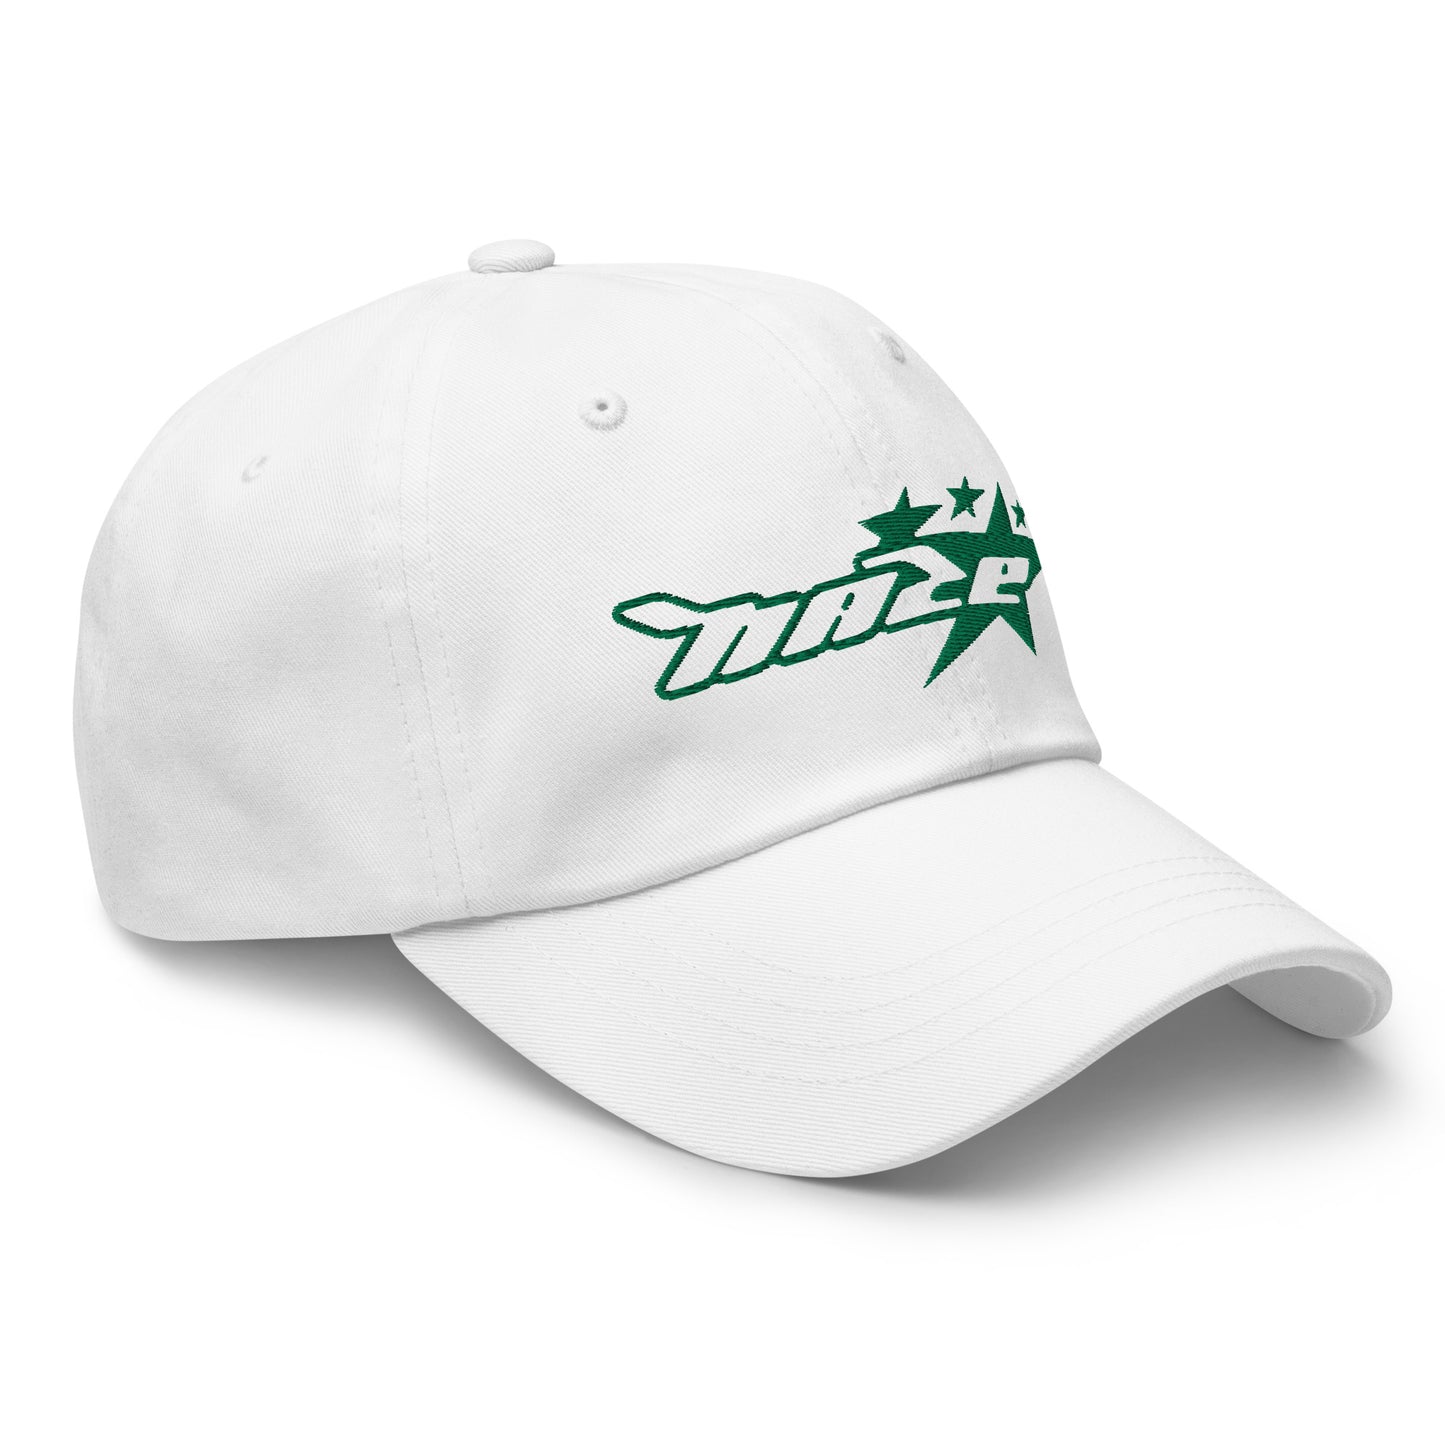 Green "Star" Hat